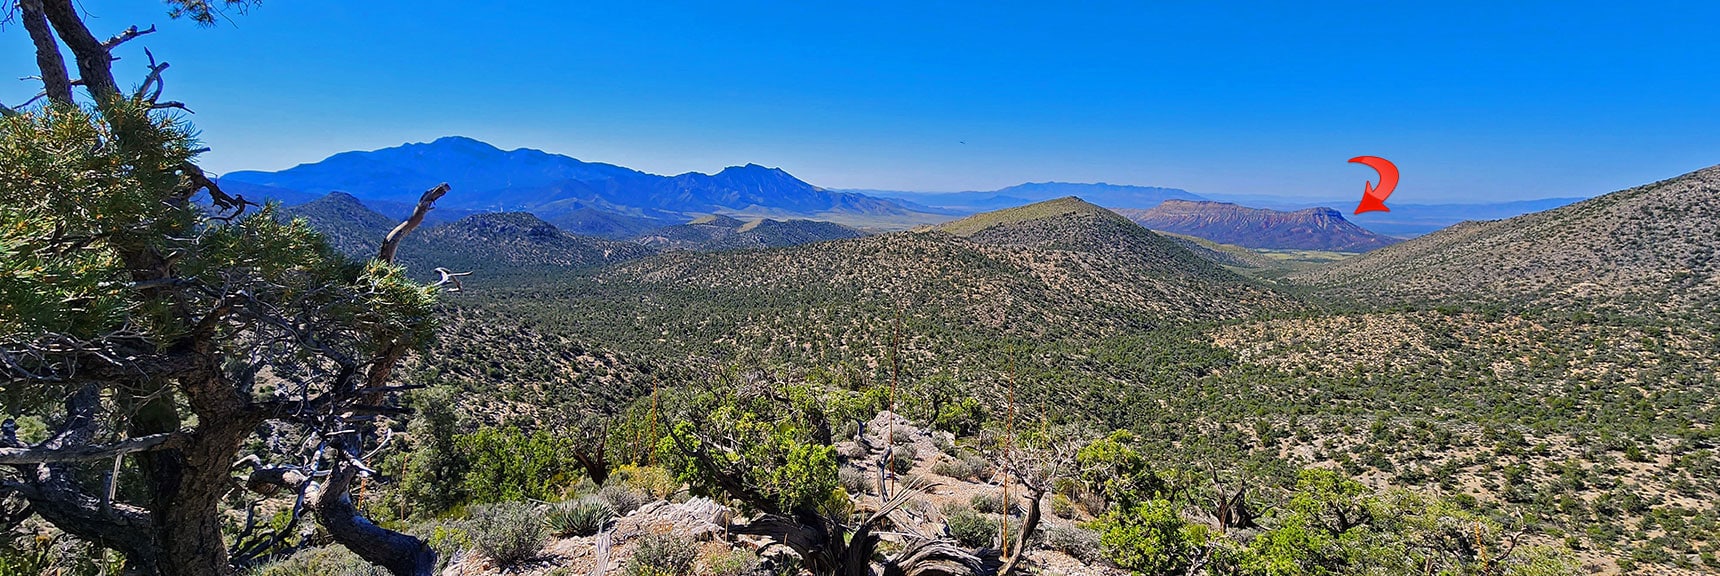 Landmark Bluff from Rainbow Mountains Upper Crest Ridgeline at Mt. Wilson | Landmark Bluff | Lovell Canyon, Nevada